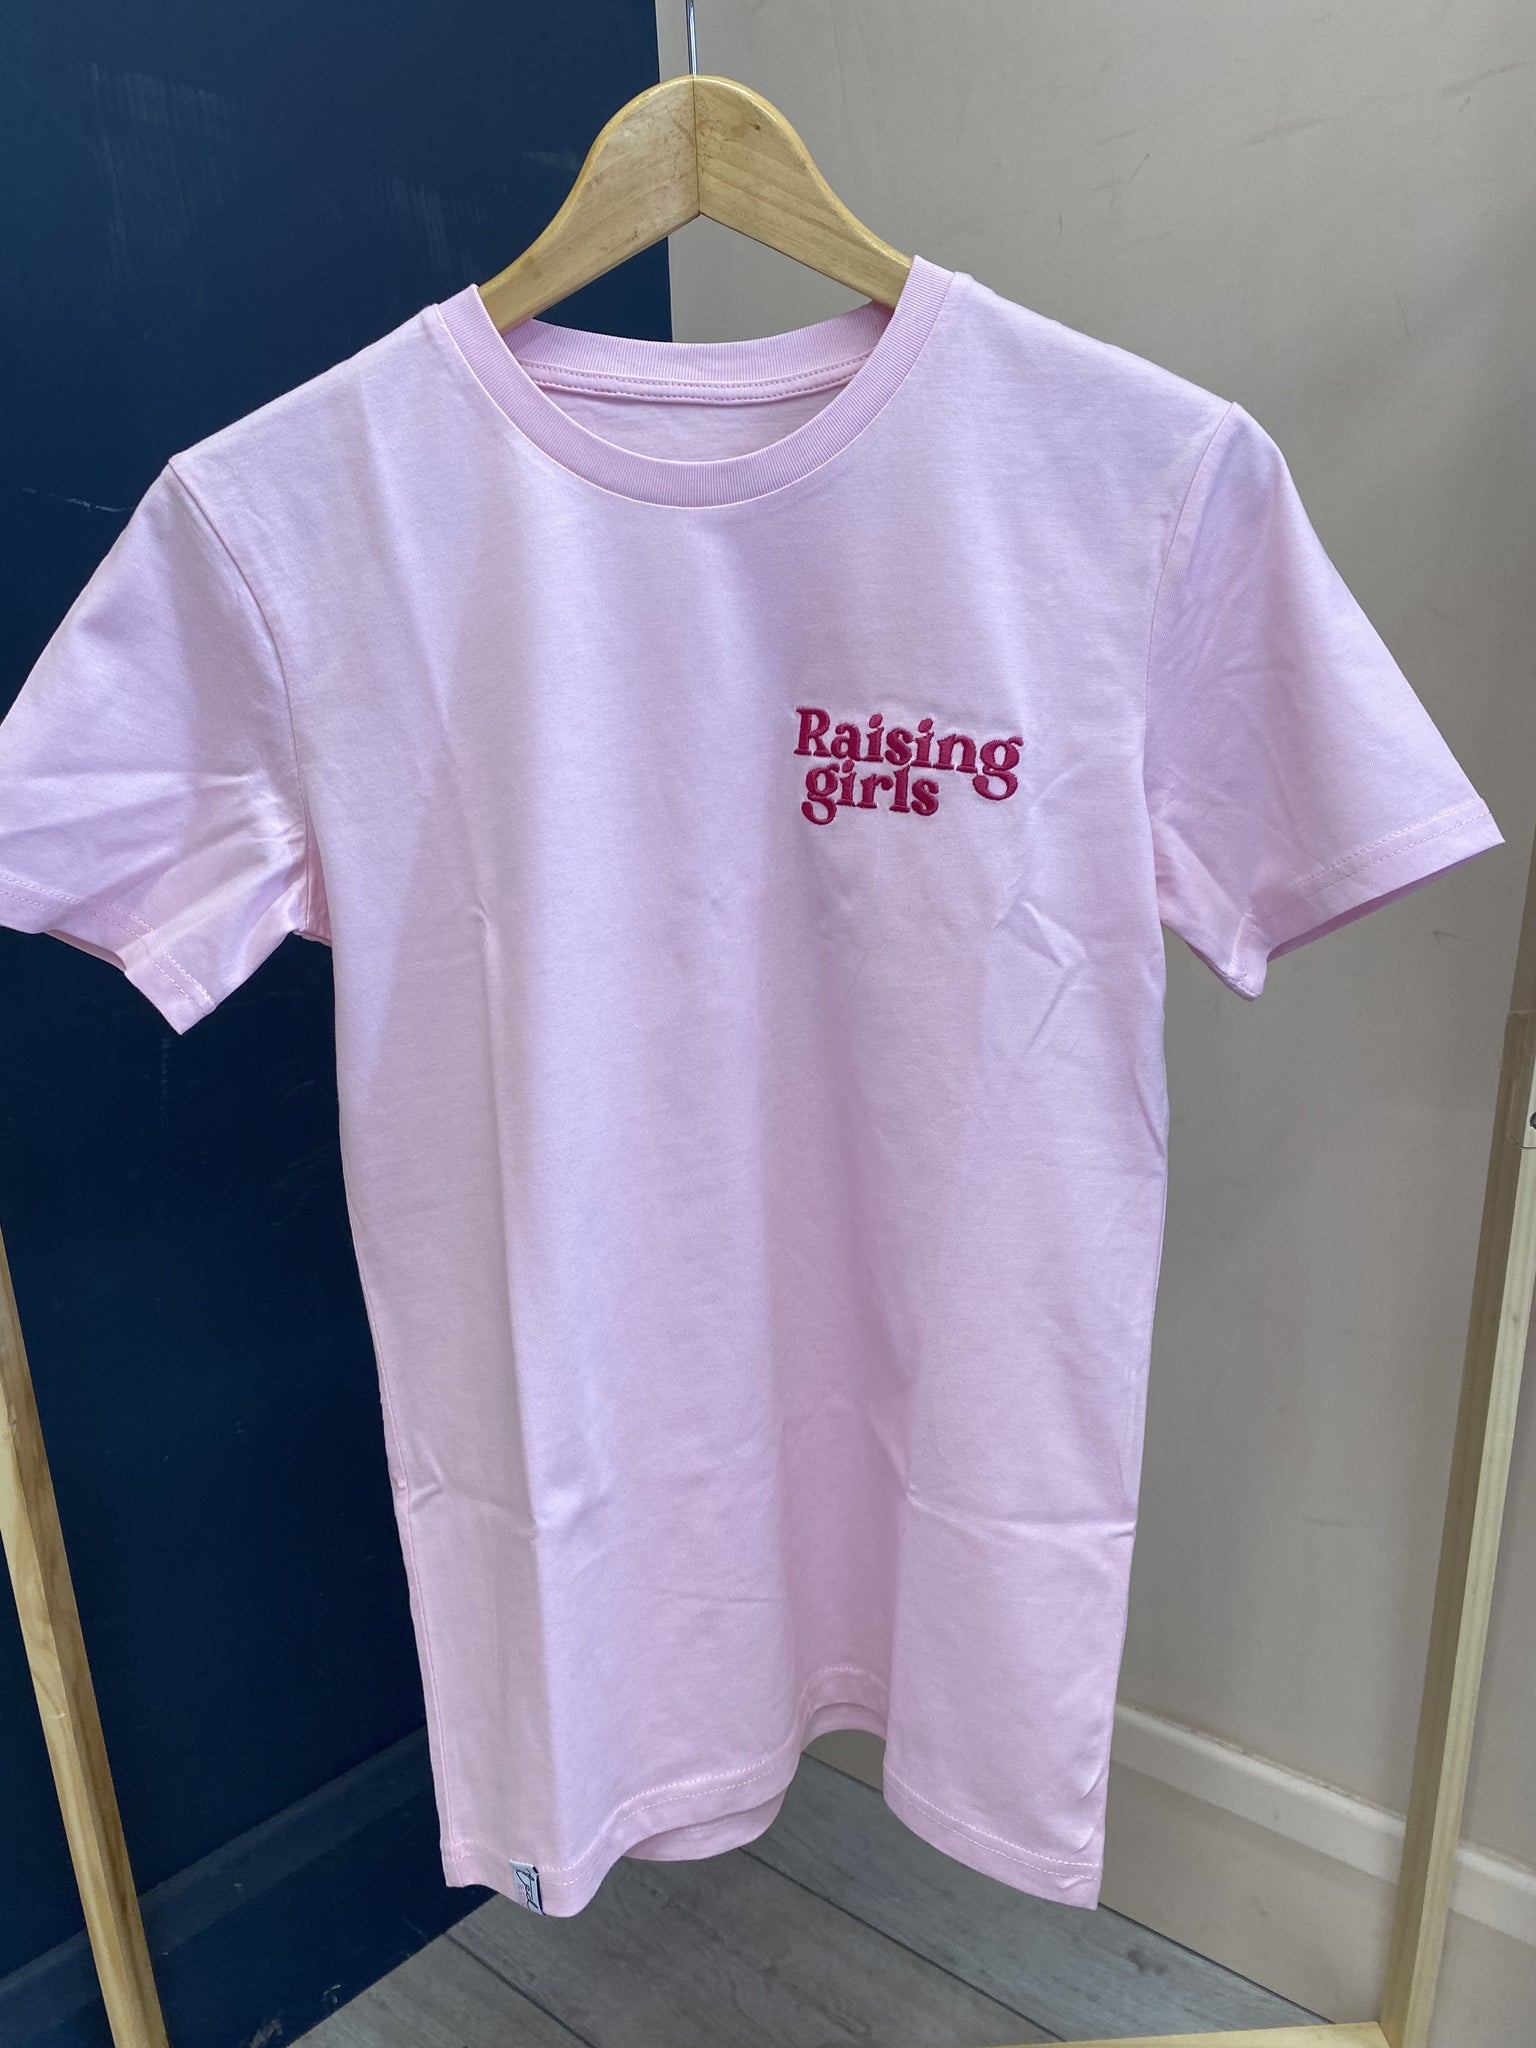 SAMPLE SALE 'Raising Girls' Baby Pink T-Shirt with hot pink stitching, XS